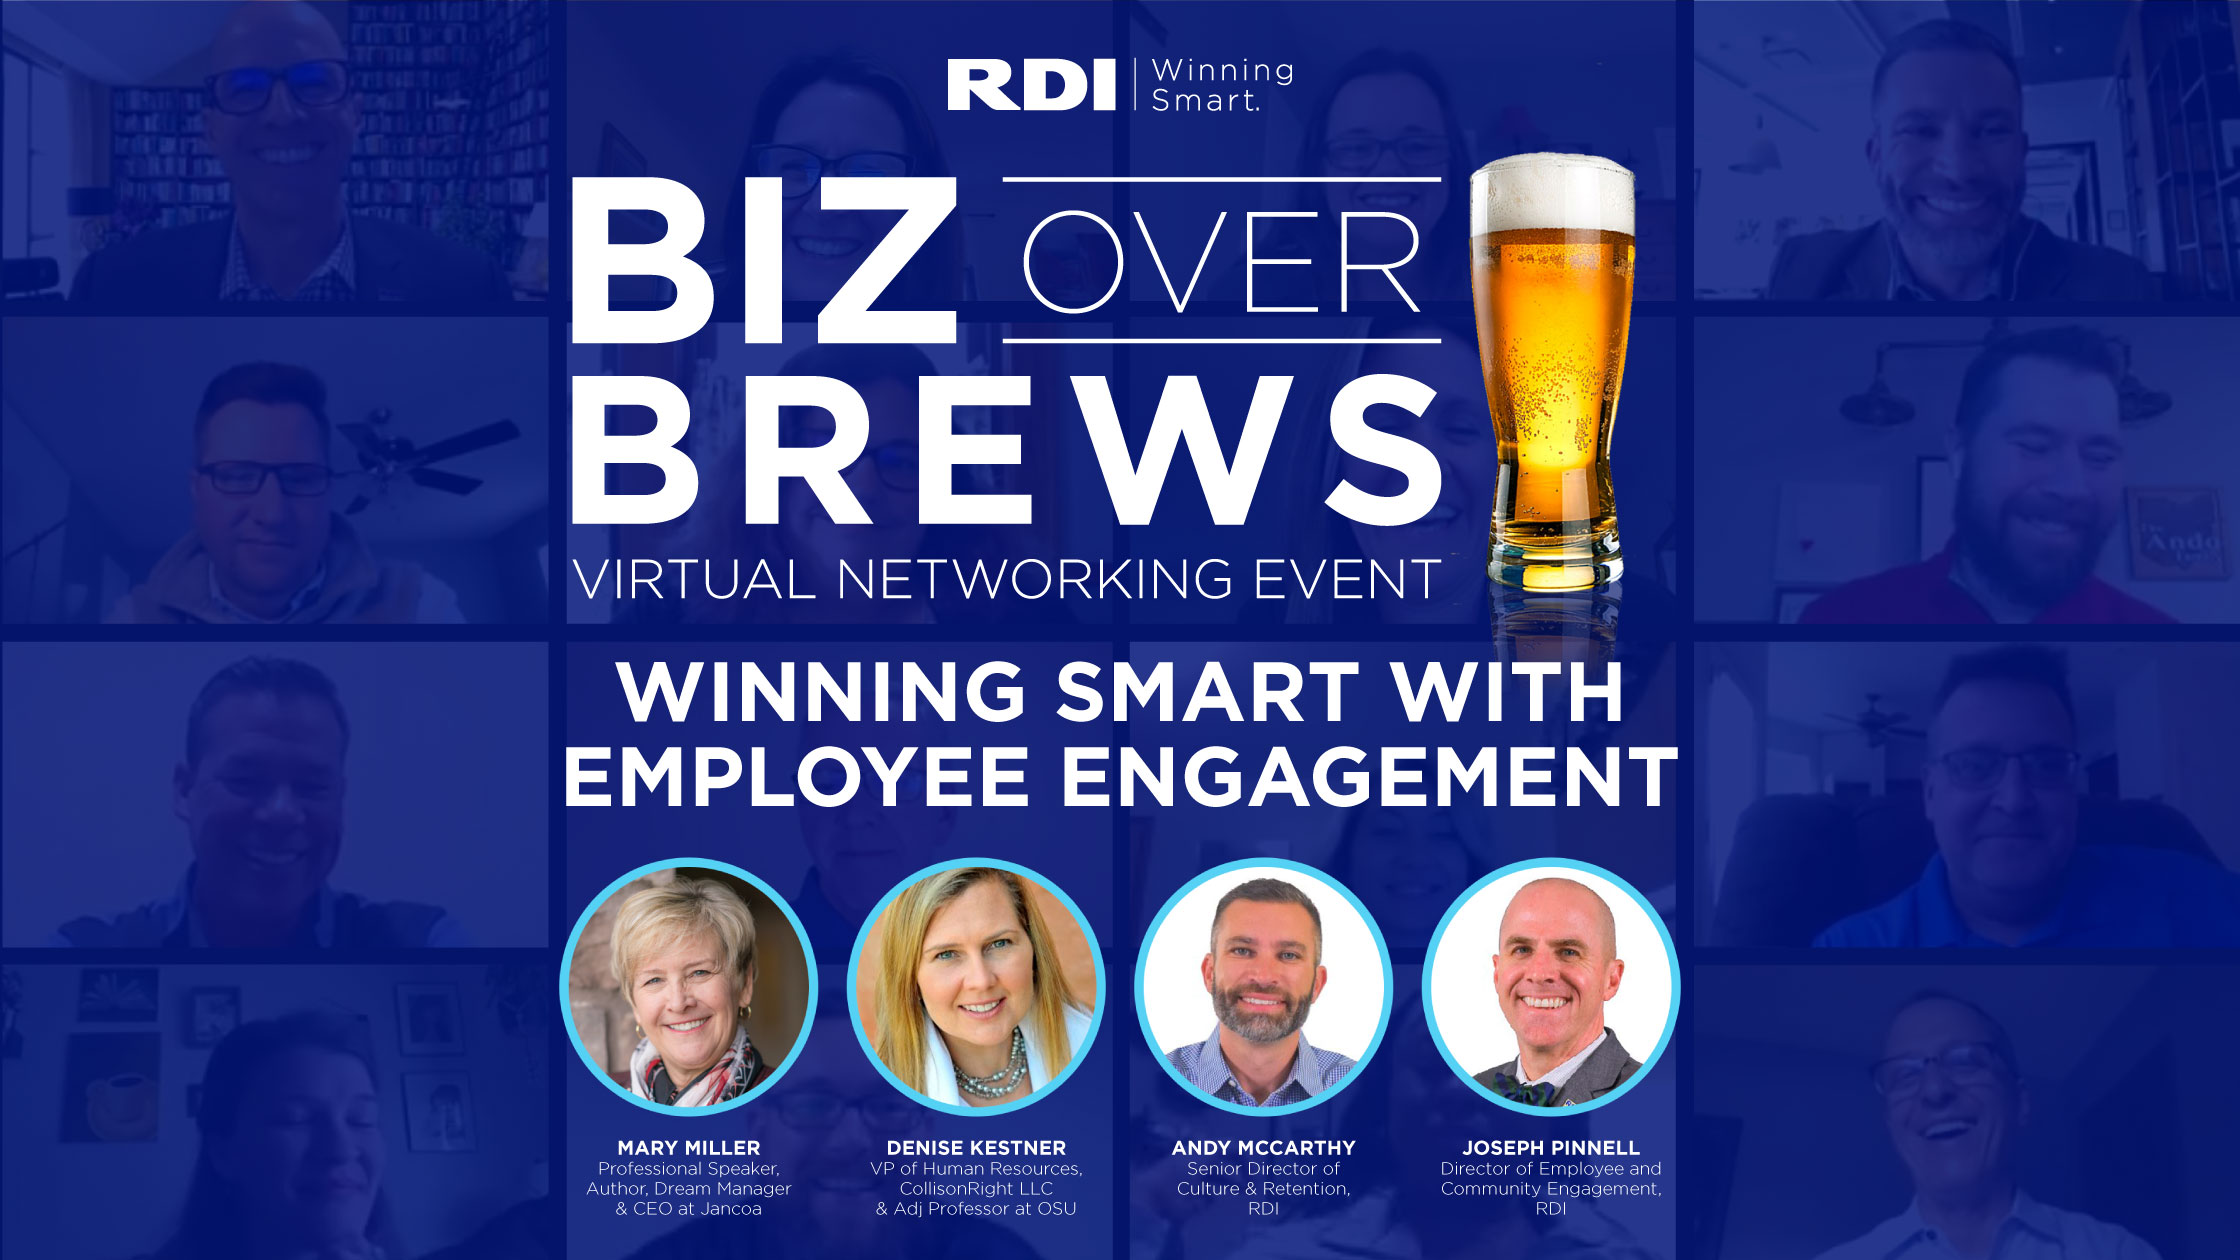 Biz Over Brews - Winning Smart with Employee Engagement